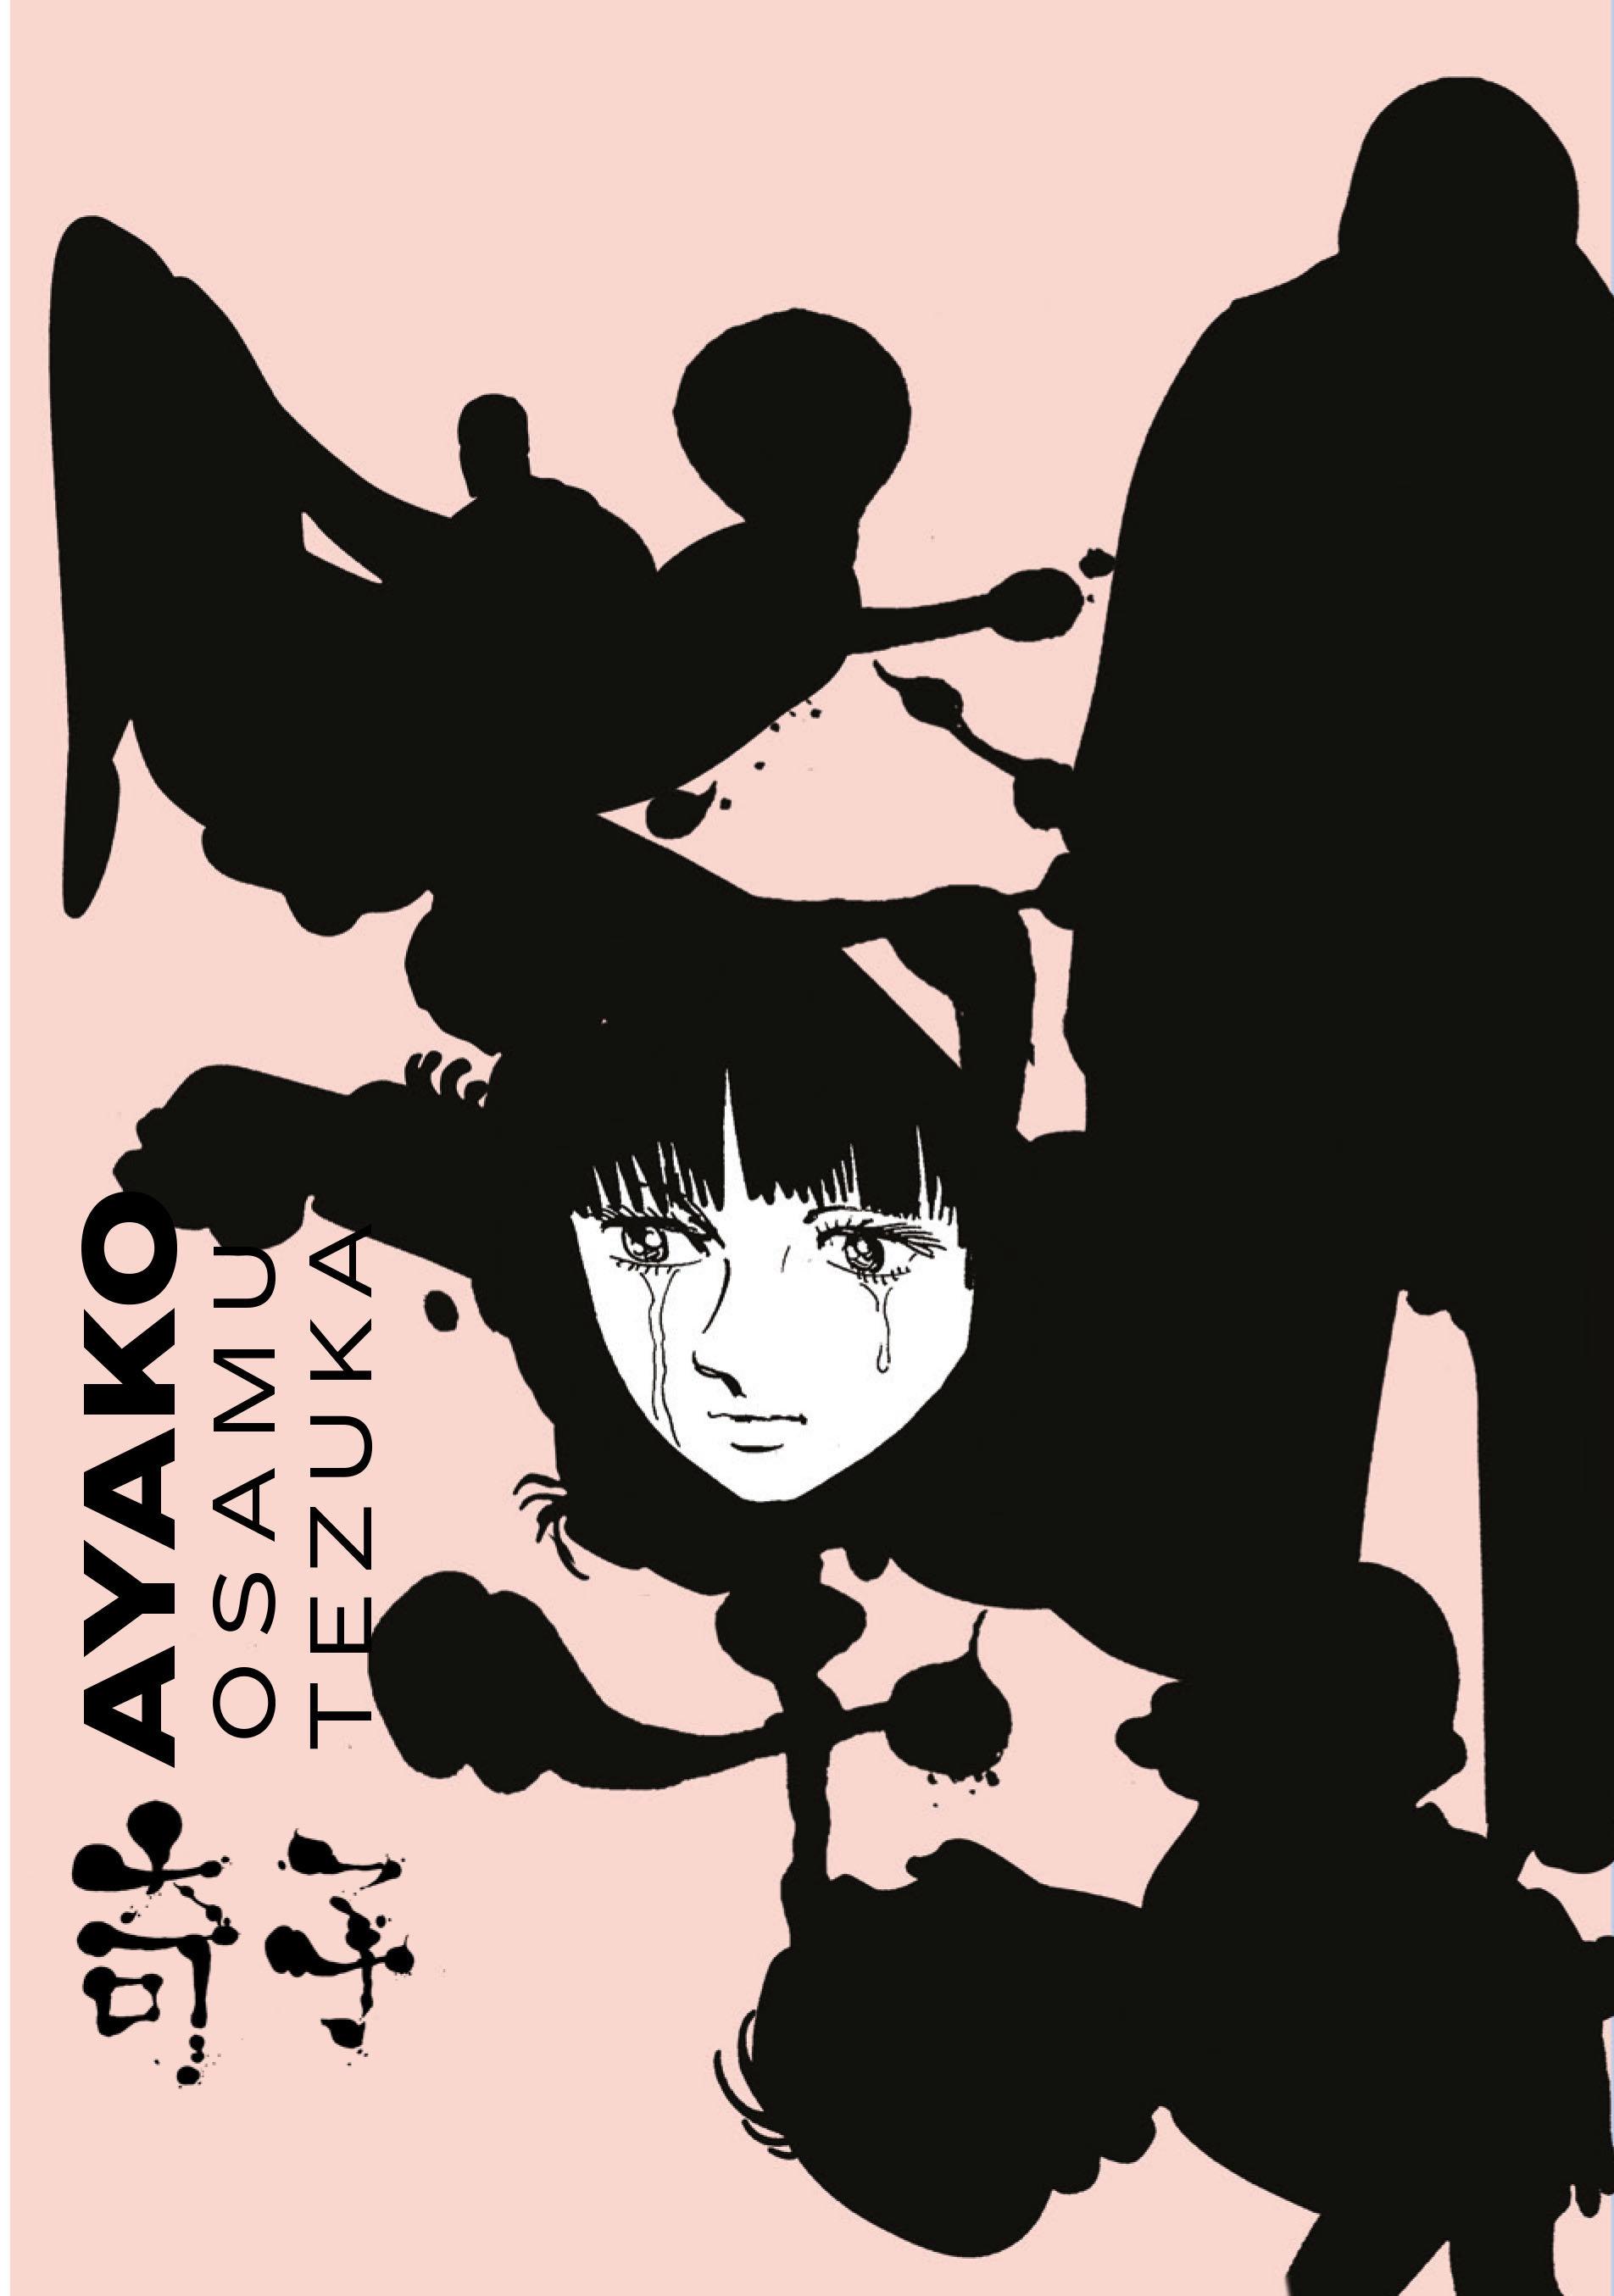 6º Encontro: Ayako @ Osamu Tezuka